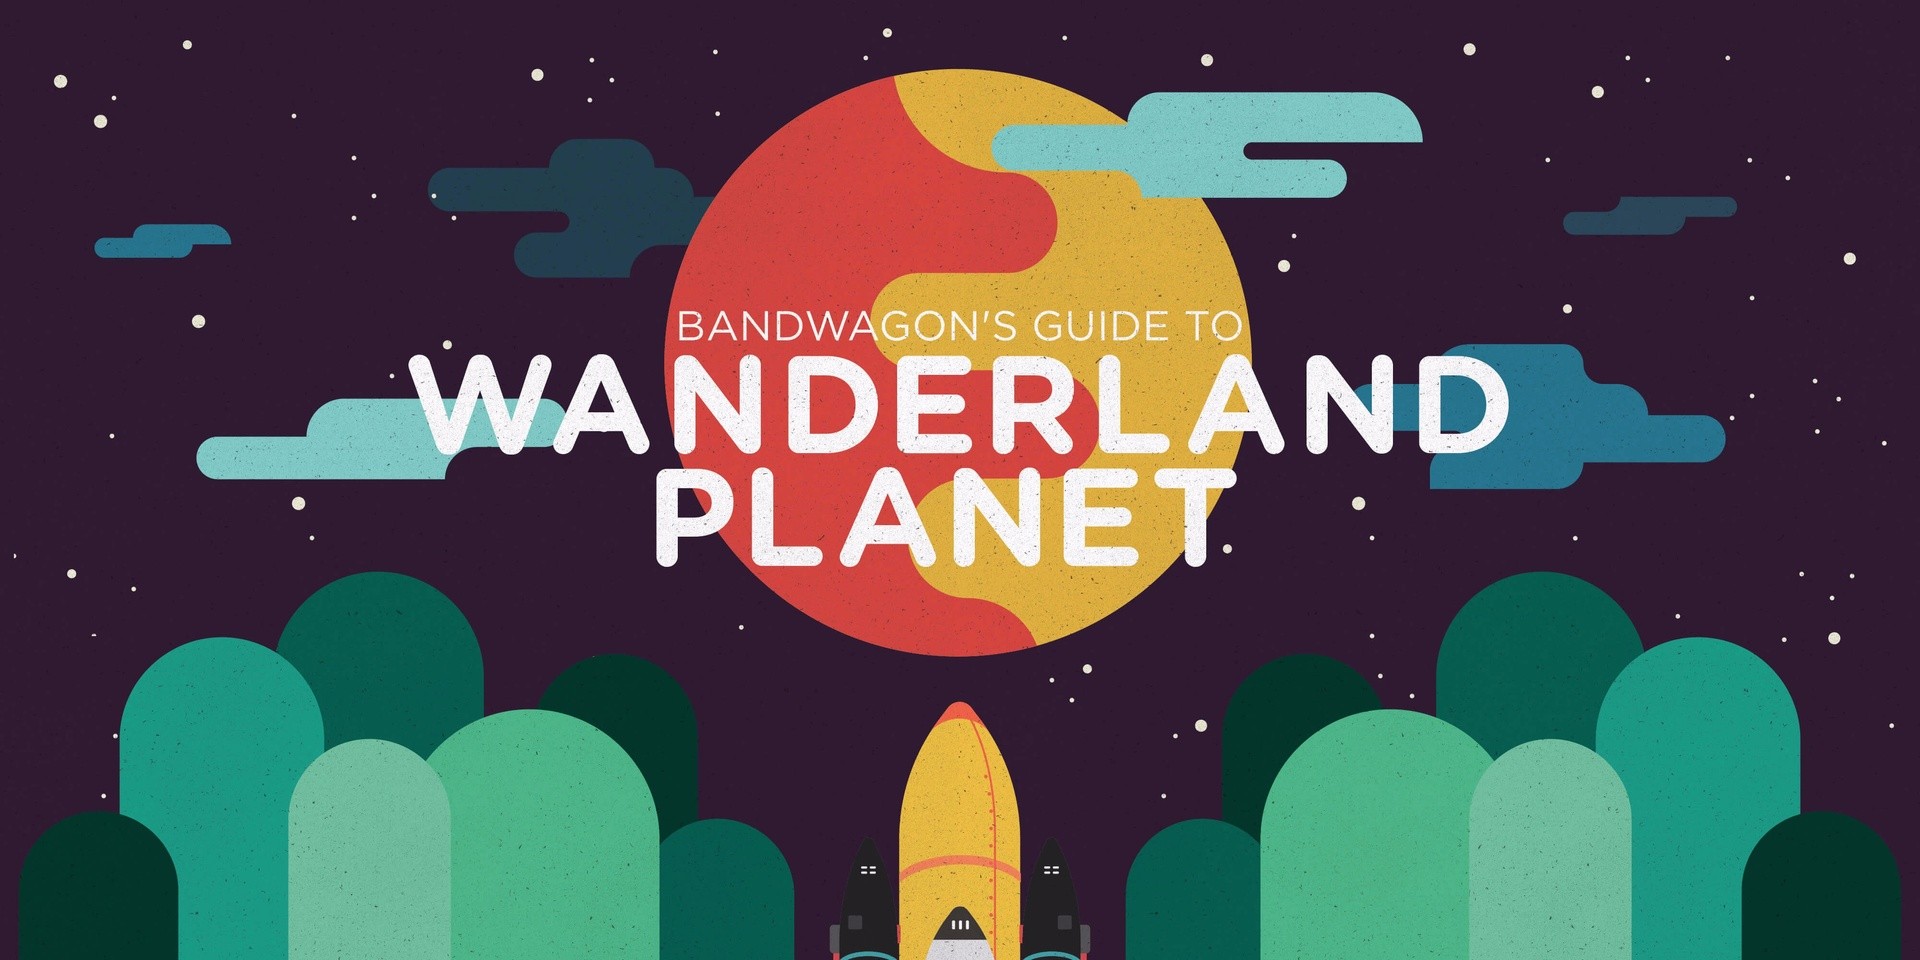 Bandwagon's Guide to Wanderland Planet 2016 